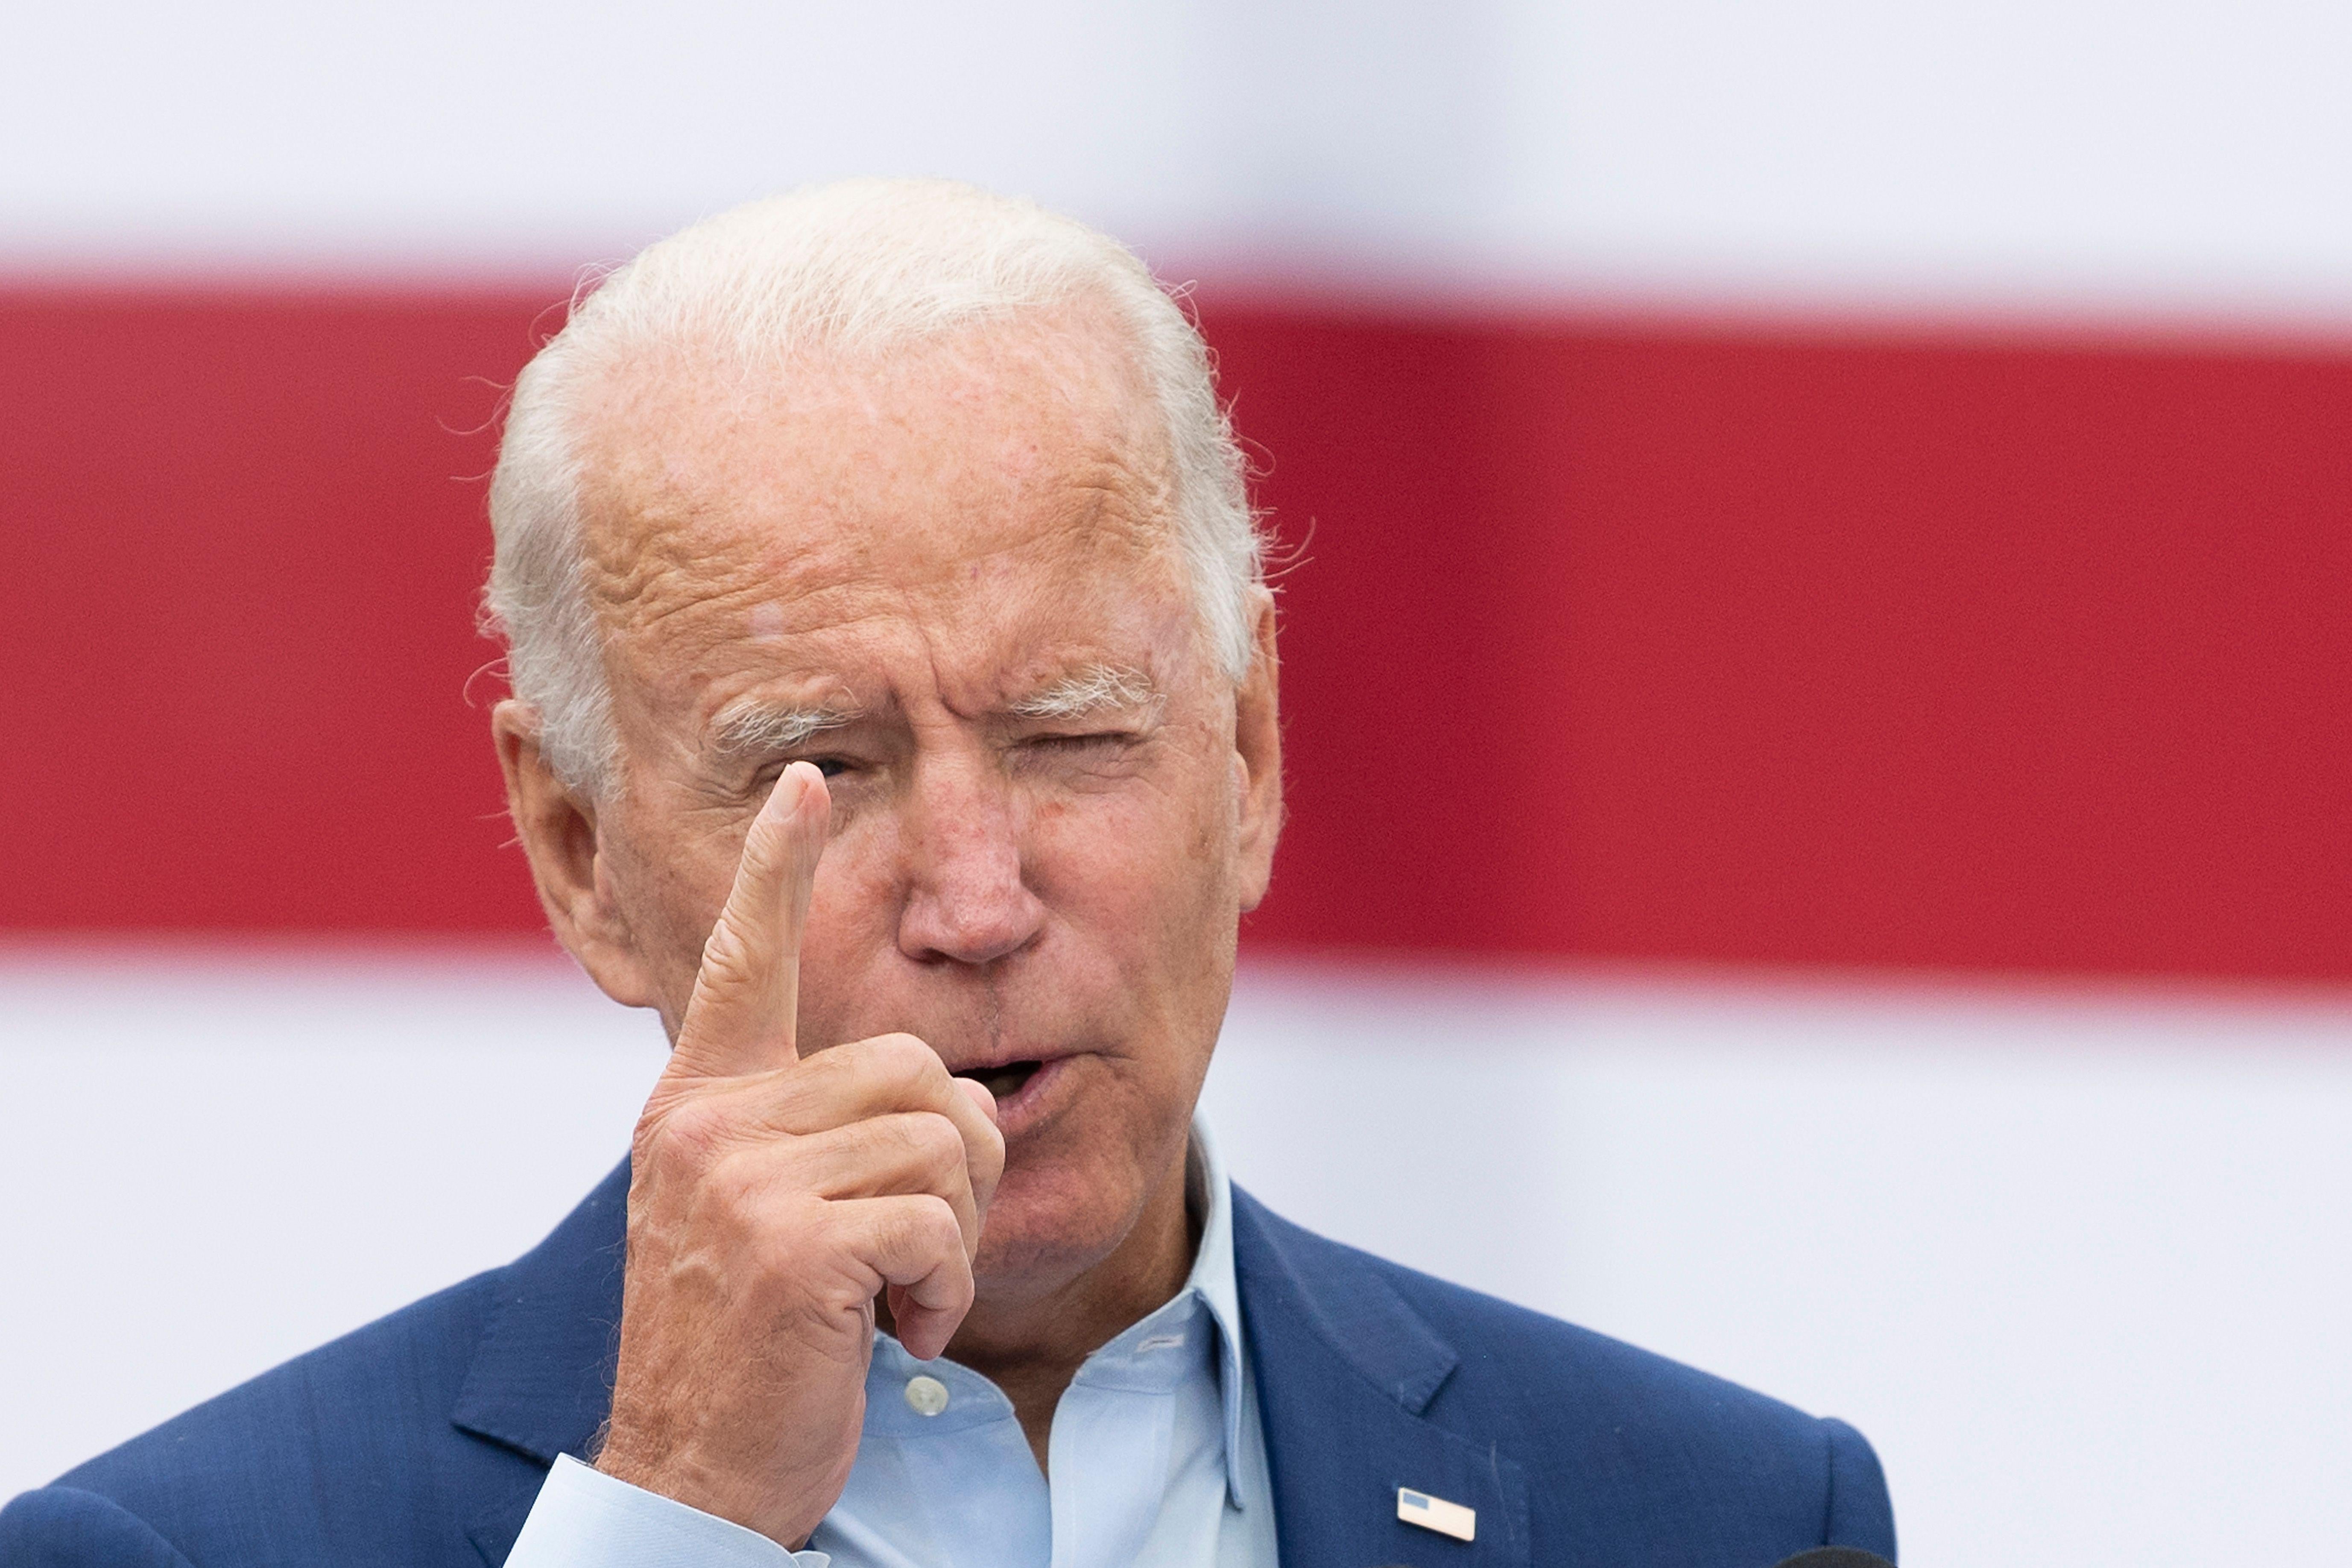 Joe Biden holds up a finger as he speaks in front of an American flag